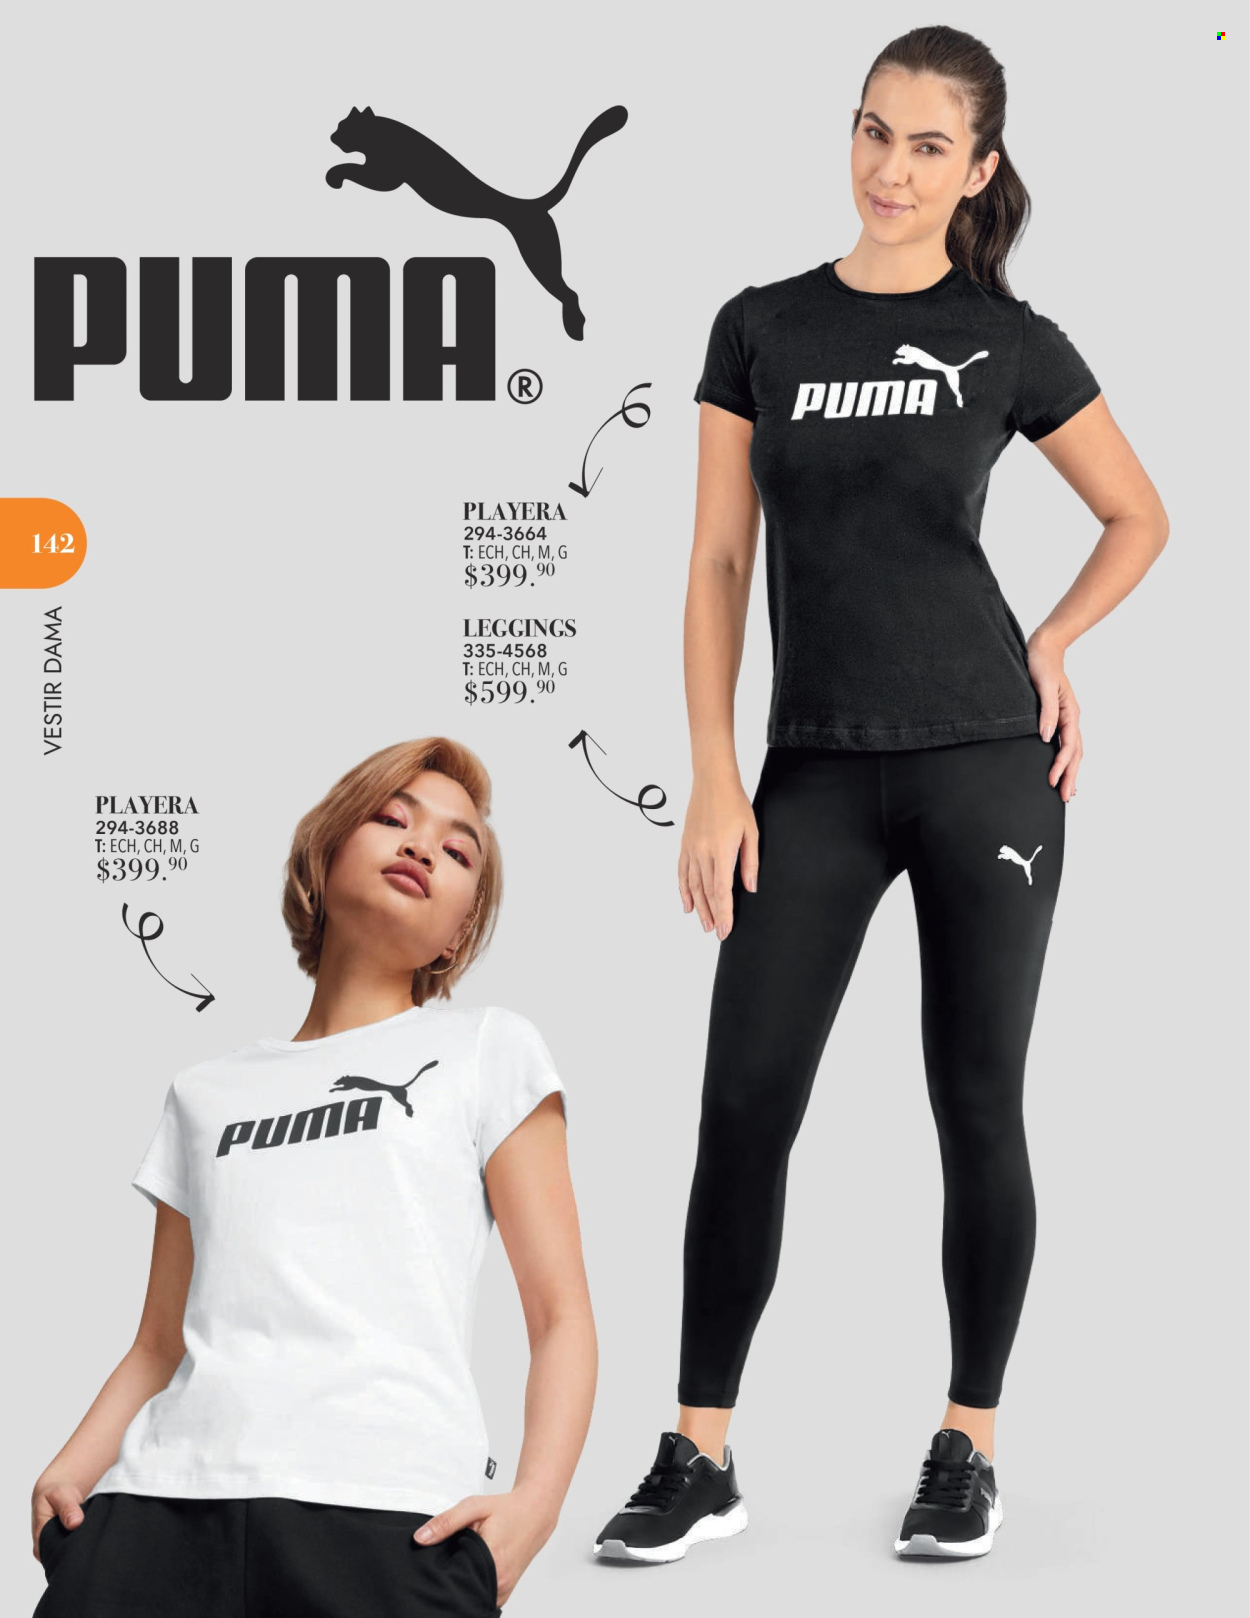 thumbnail - Folleto actual Andrea - Ventas - Puma, playera, leggings. Página 142.